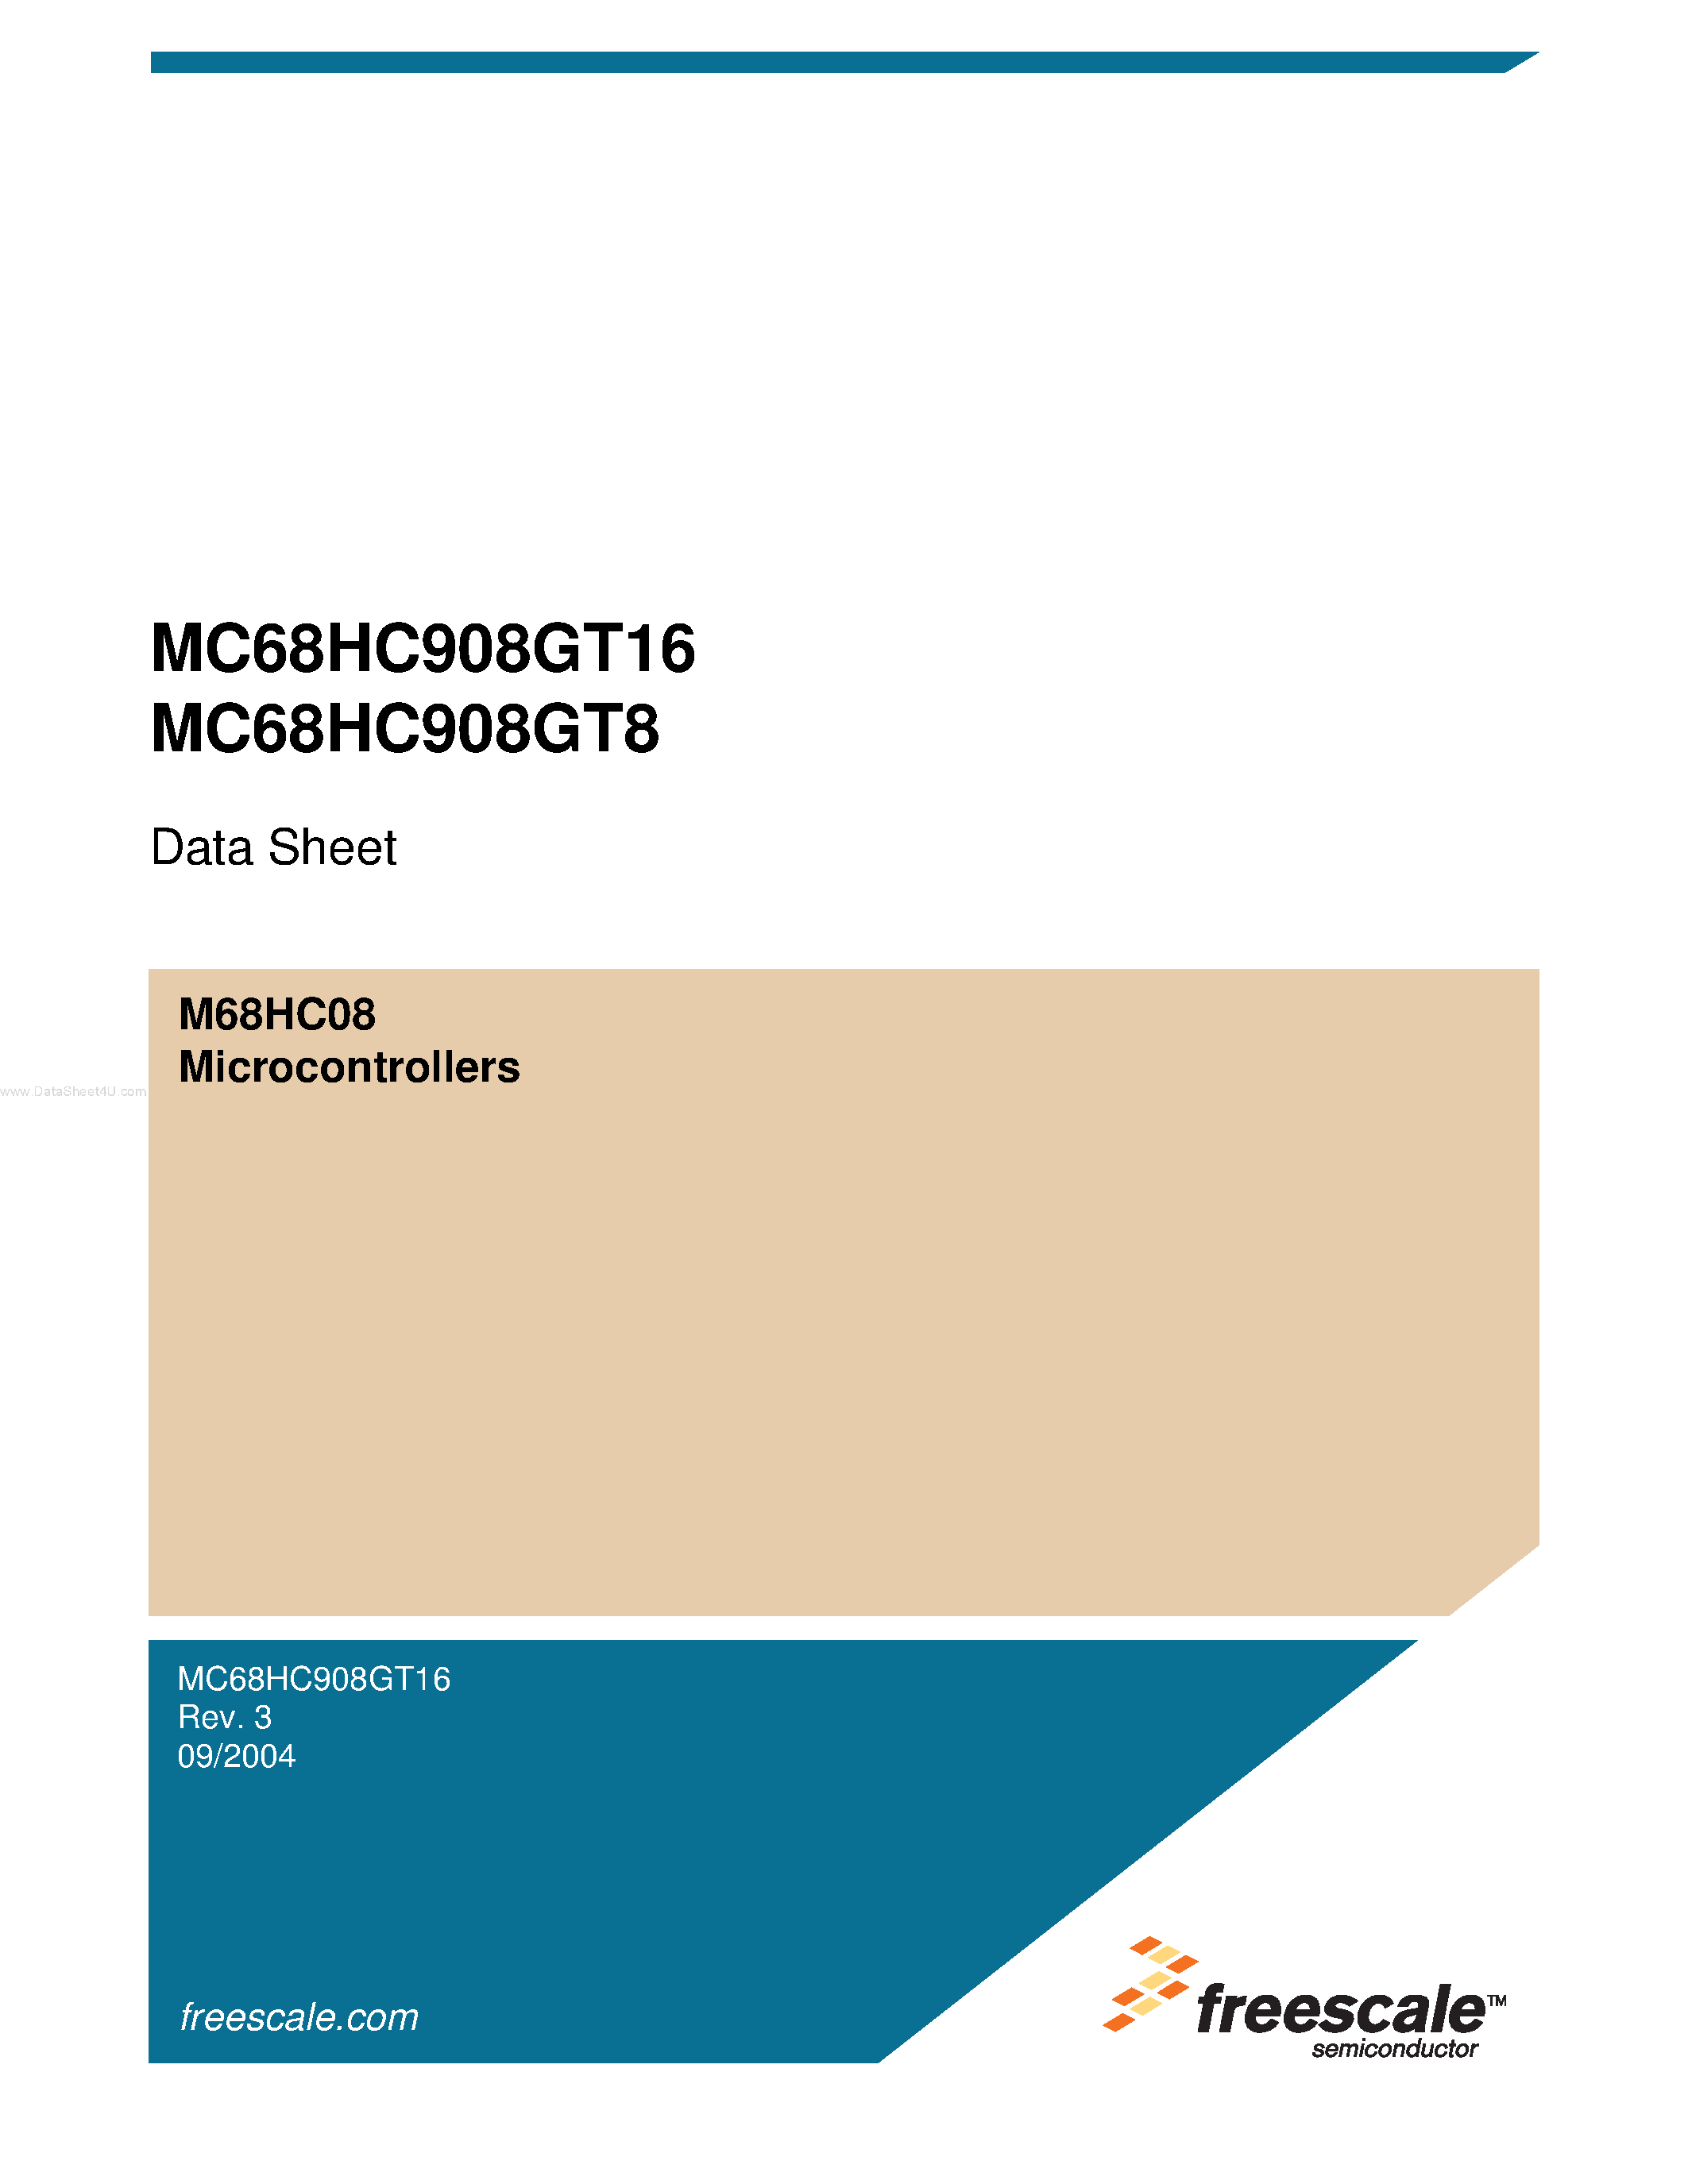 Datasheet MC908GT16 - (MC908GT8 / MC908GT16) Microcontrollers page 1